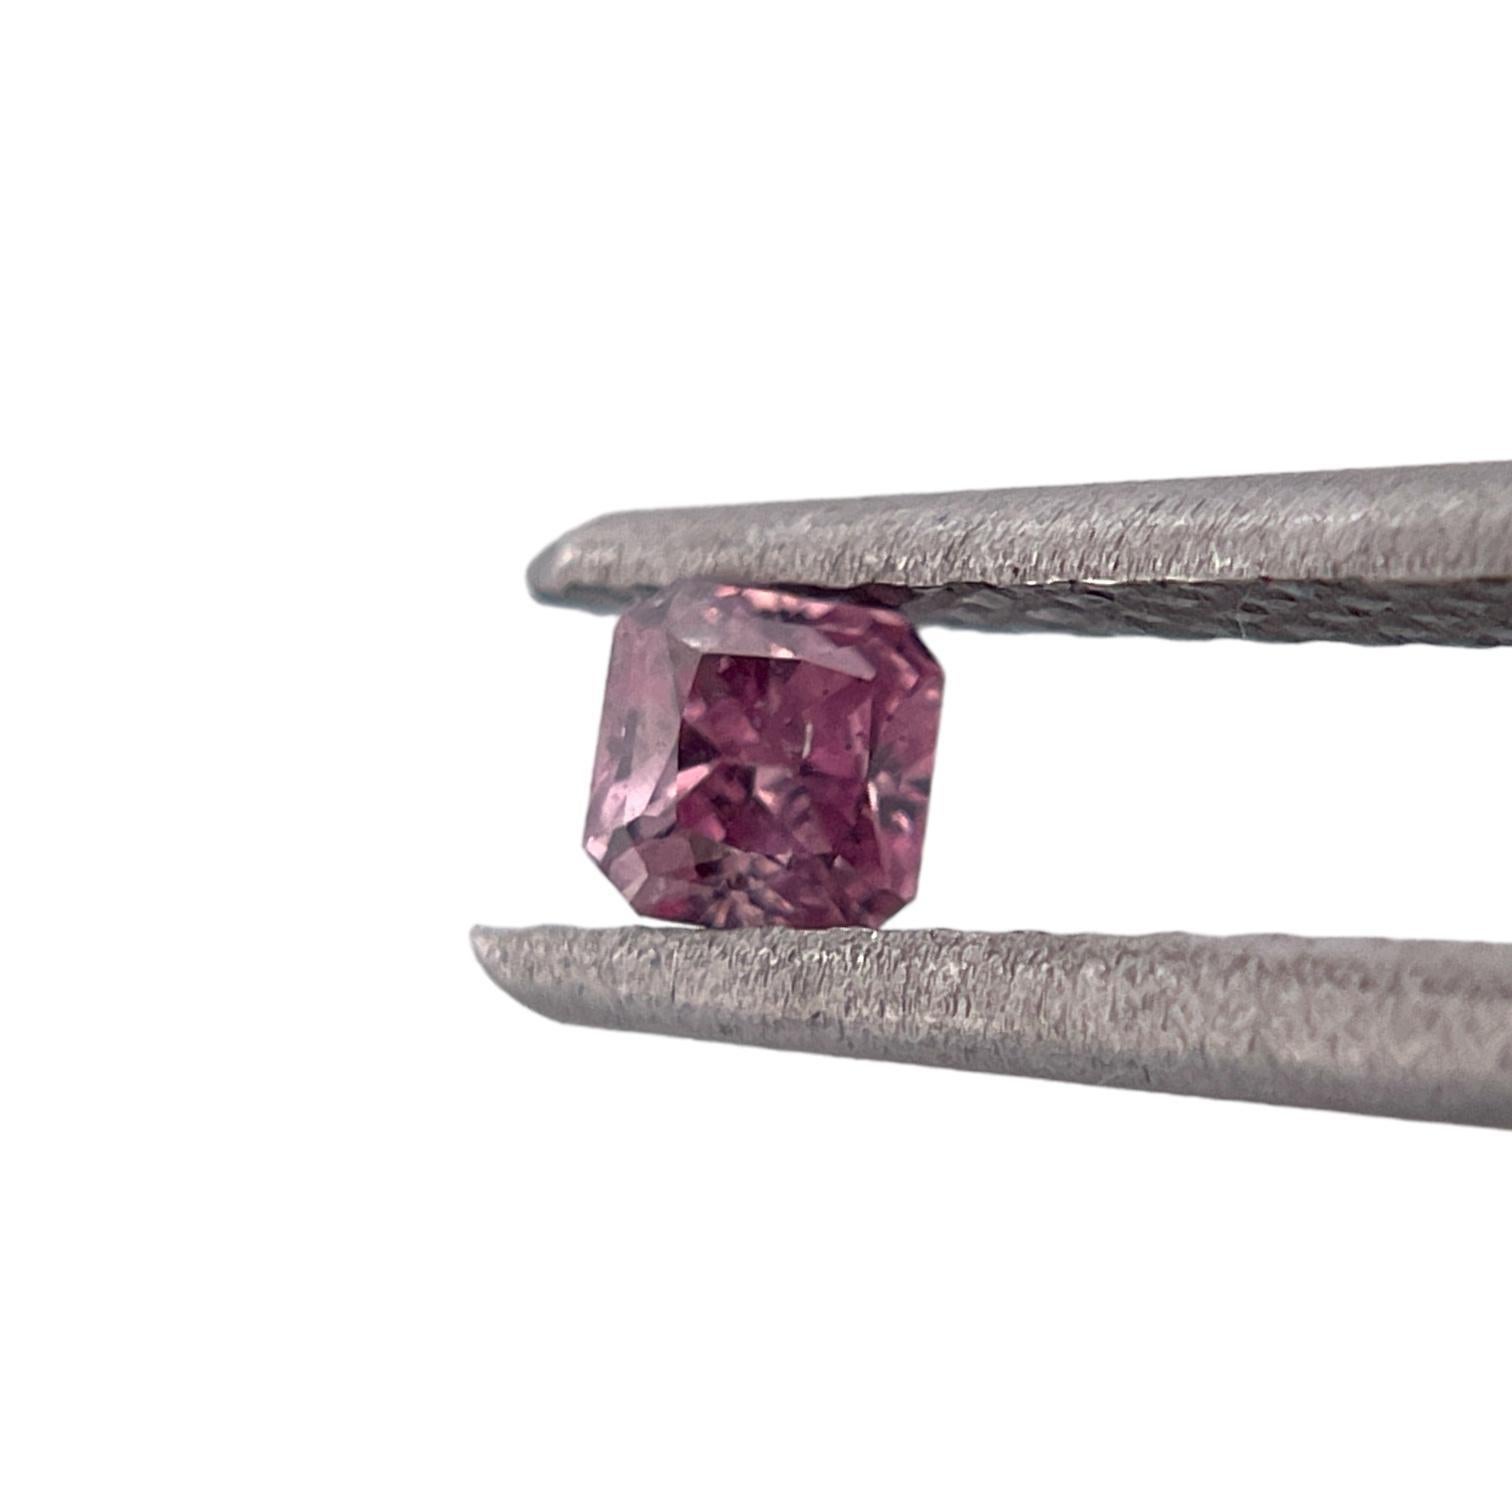 ITEM DESCRIPTION

ID #: NYC57750
Stone Shape: Radiant
Diamond Weight: 0.14Carat
Fancy Color: Intense Purple Pink
Cut:	Brilliant
Measurements: 2.94 x 2.87 x 1.98 mm
Symmetry: Excellent
Polish: Excellent
Fluorescence: None
Certifying Lab: GIA
GIA